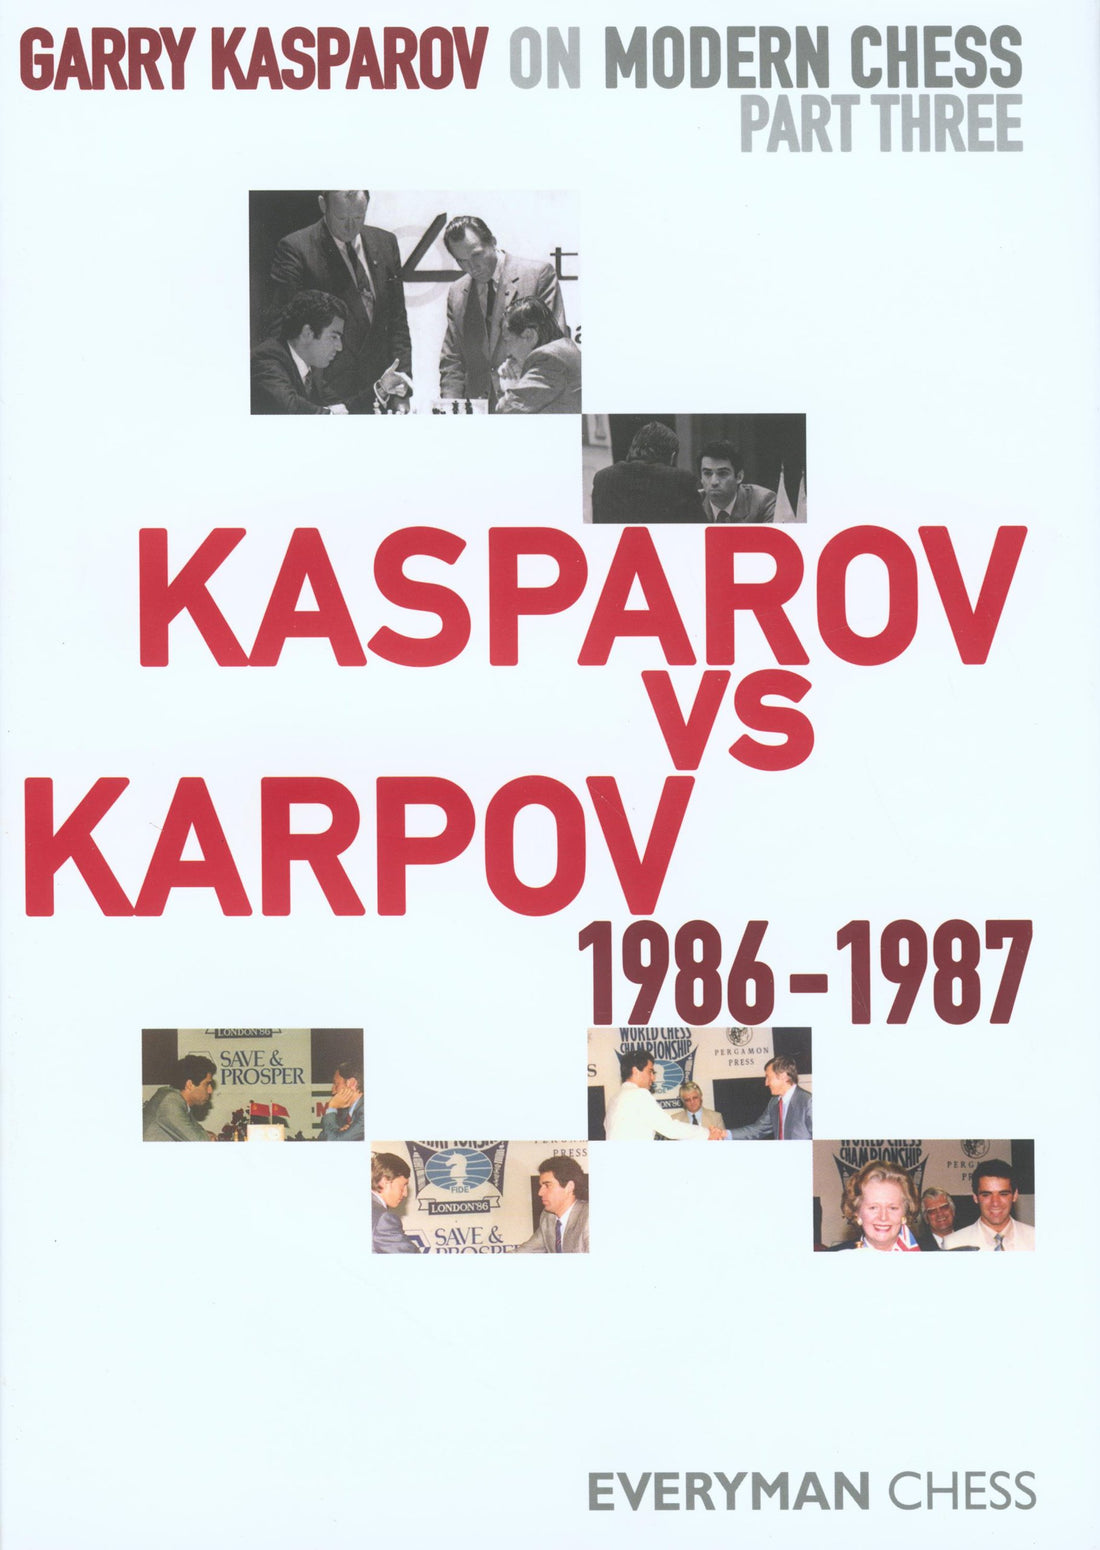  Garry Kasparov on Modern Chess front cover